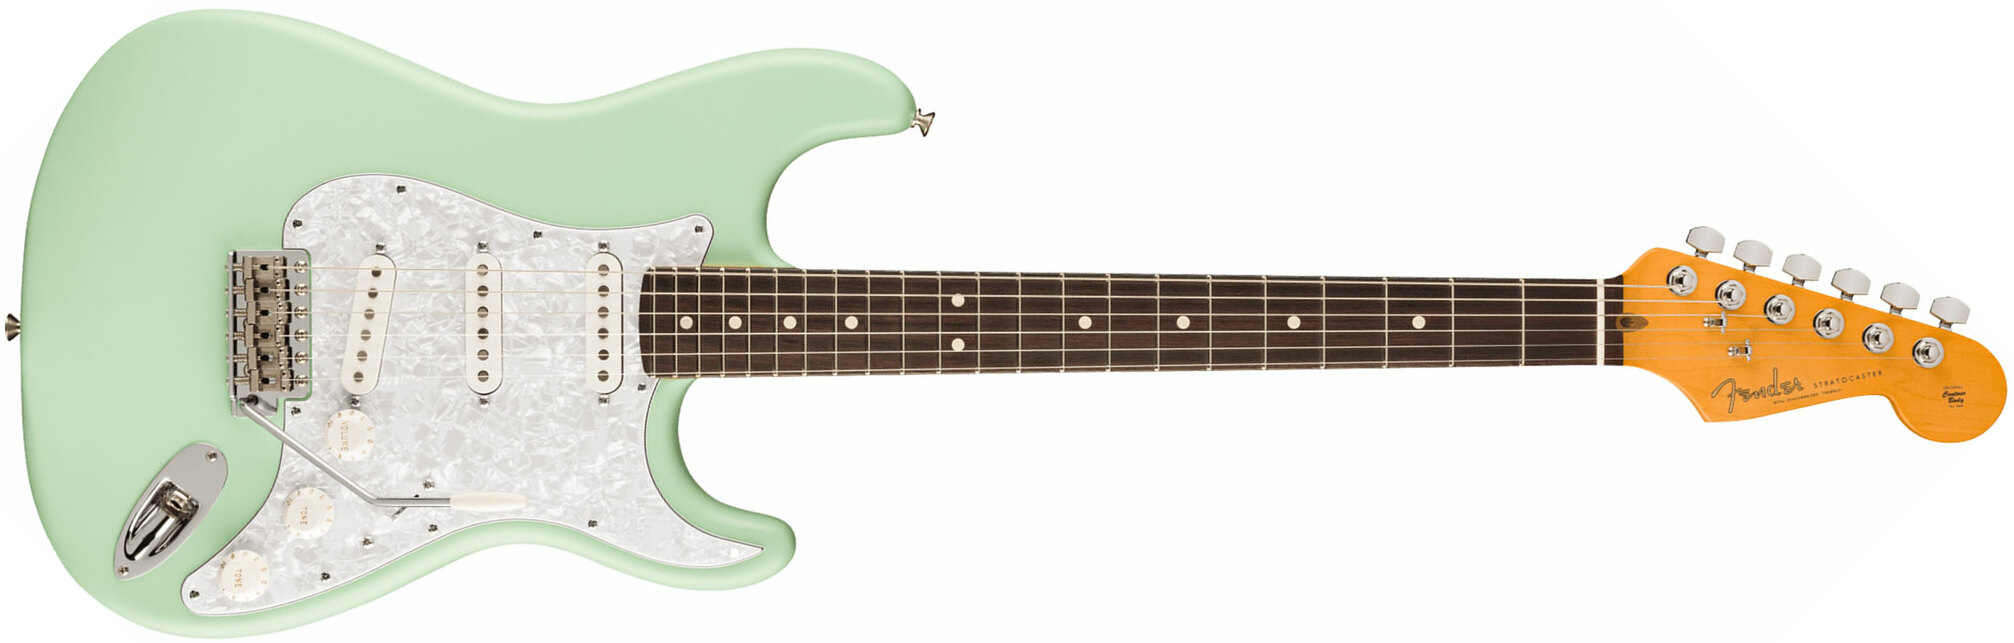 Fender Cory Wong Strat Ltd Signature Usa Stss Trem Rw - Surf Green - Str shape electric guitar - Main picture